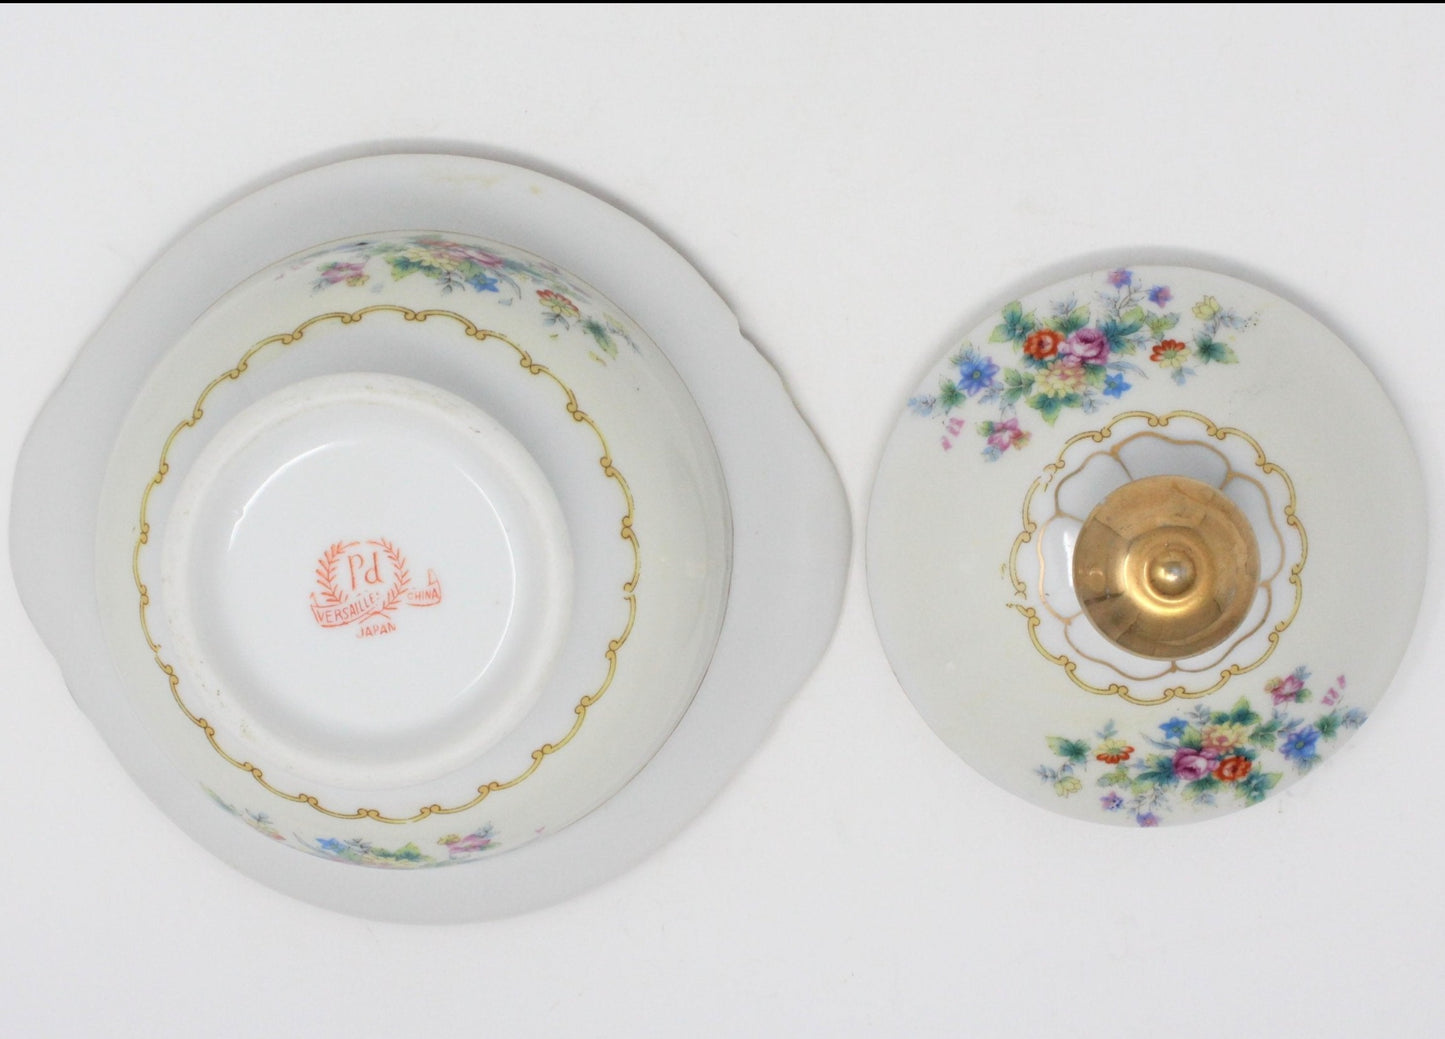 Sugar Bowl with Lid, Versailles China, Floral Pattern, Japan